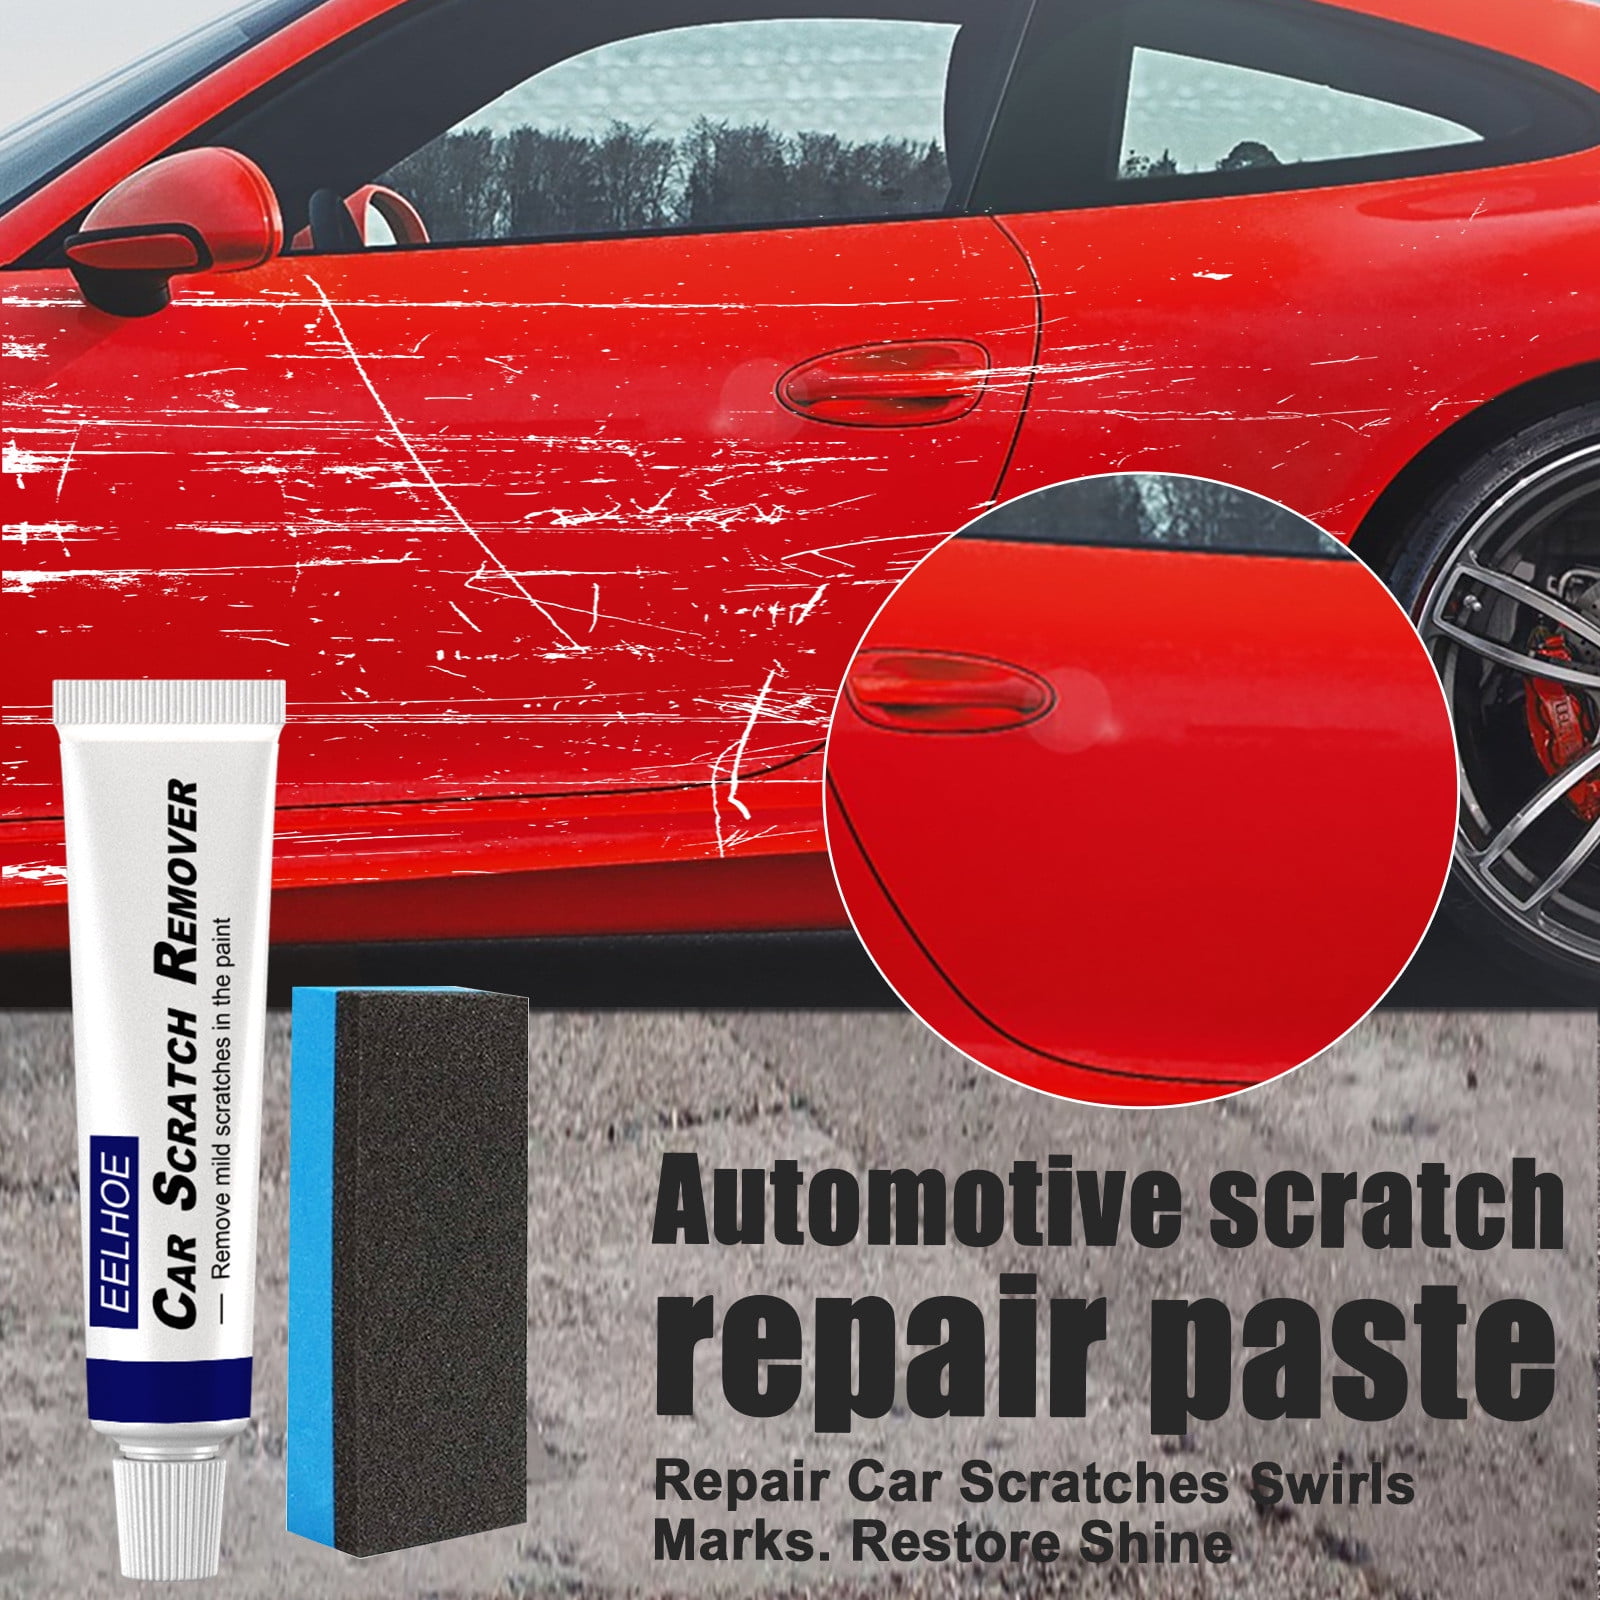 Travelwant 10Pcs/Set Car Scratch Remover Cloth, Magic Scratch Removal, Car Scratch Repair Kit for Repairing Car Scratches and Light Scratches Remover